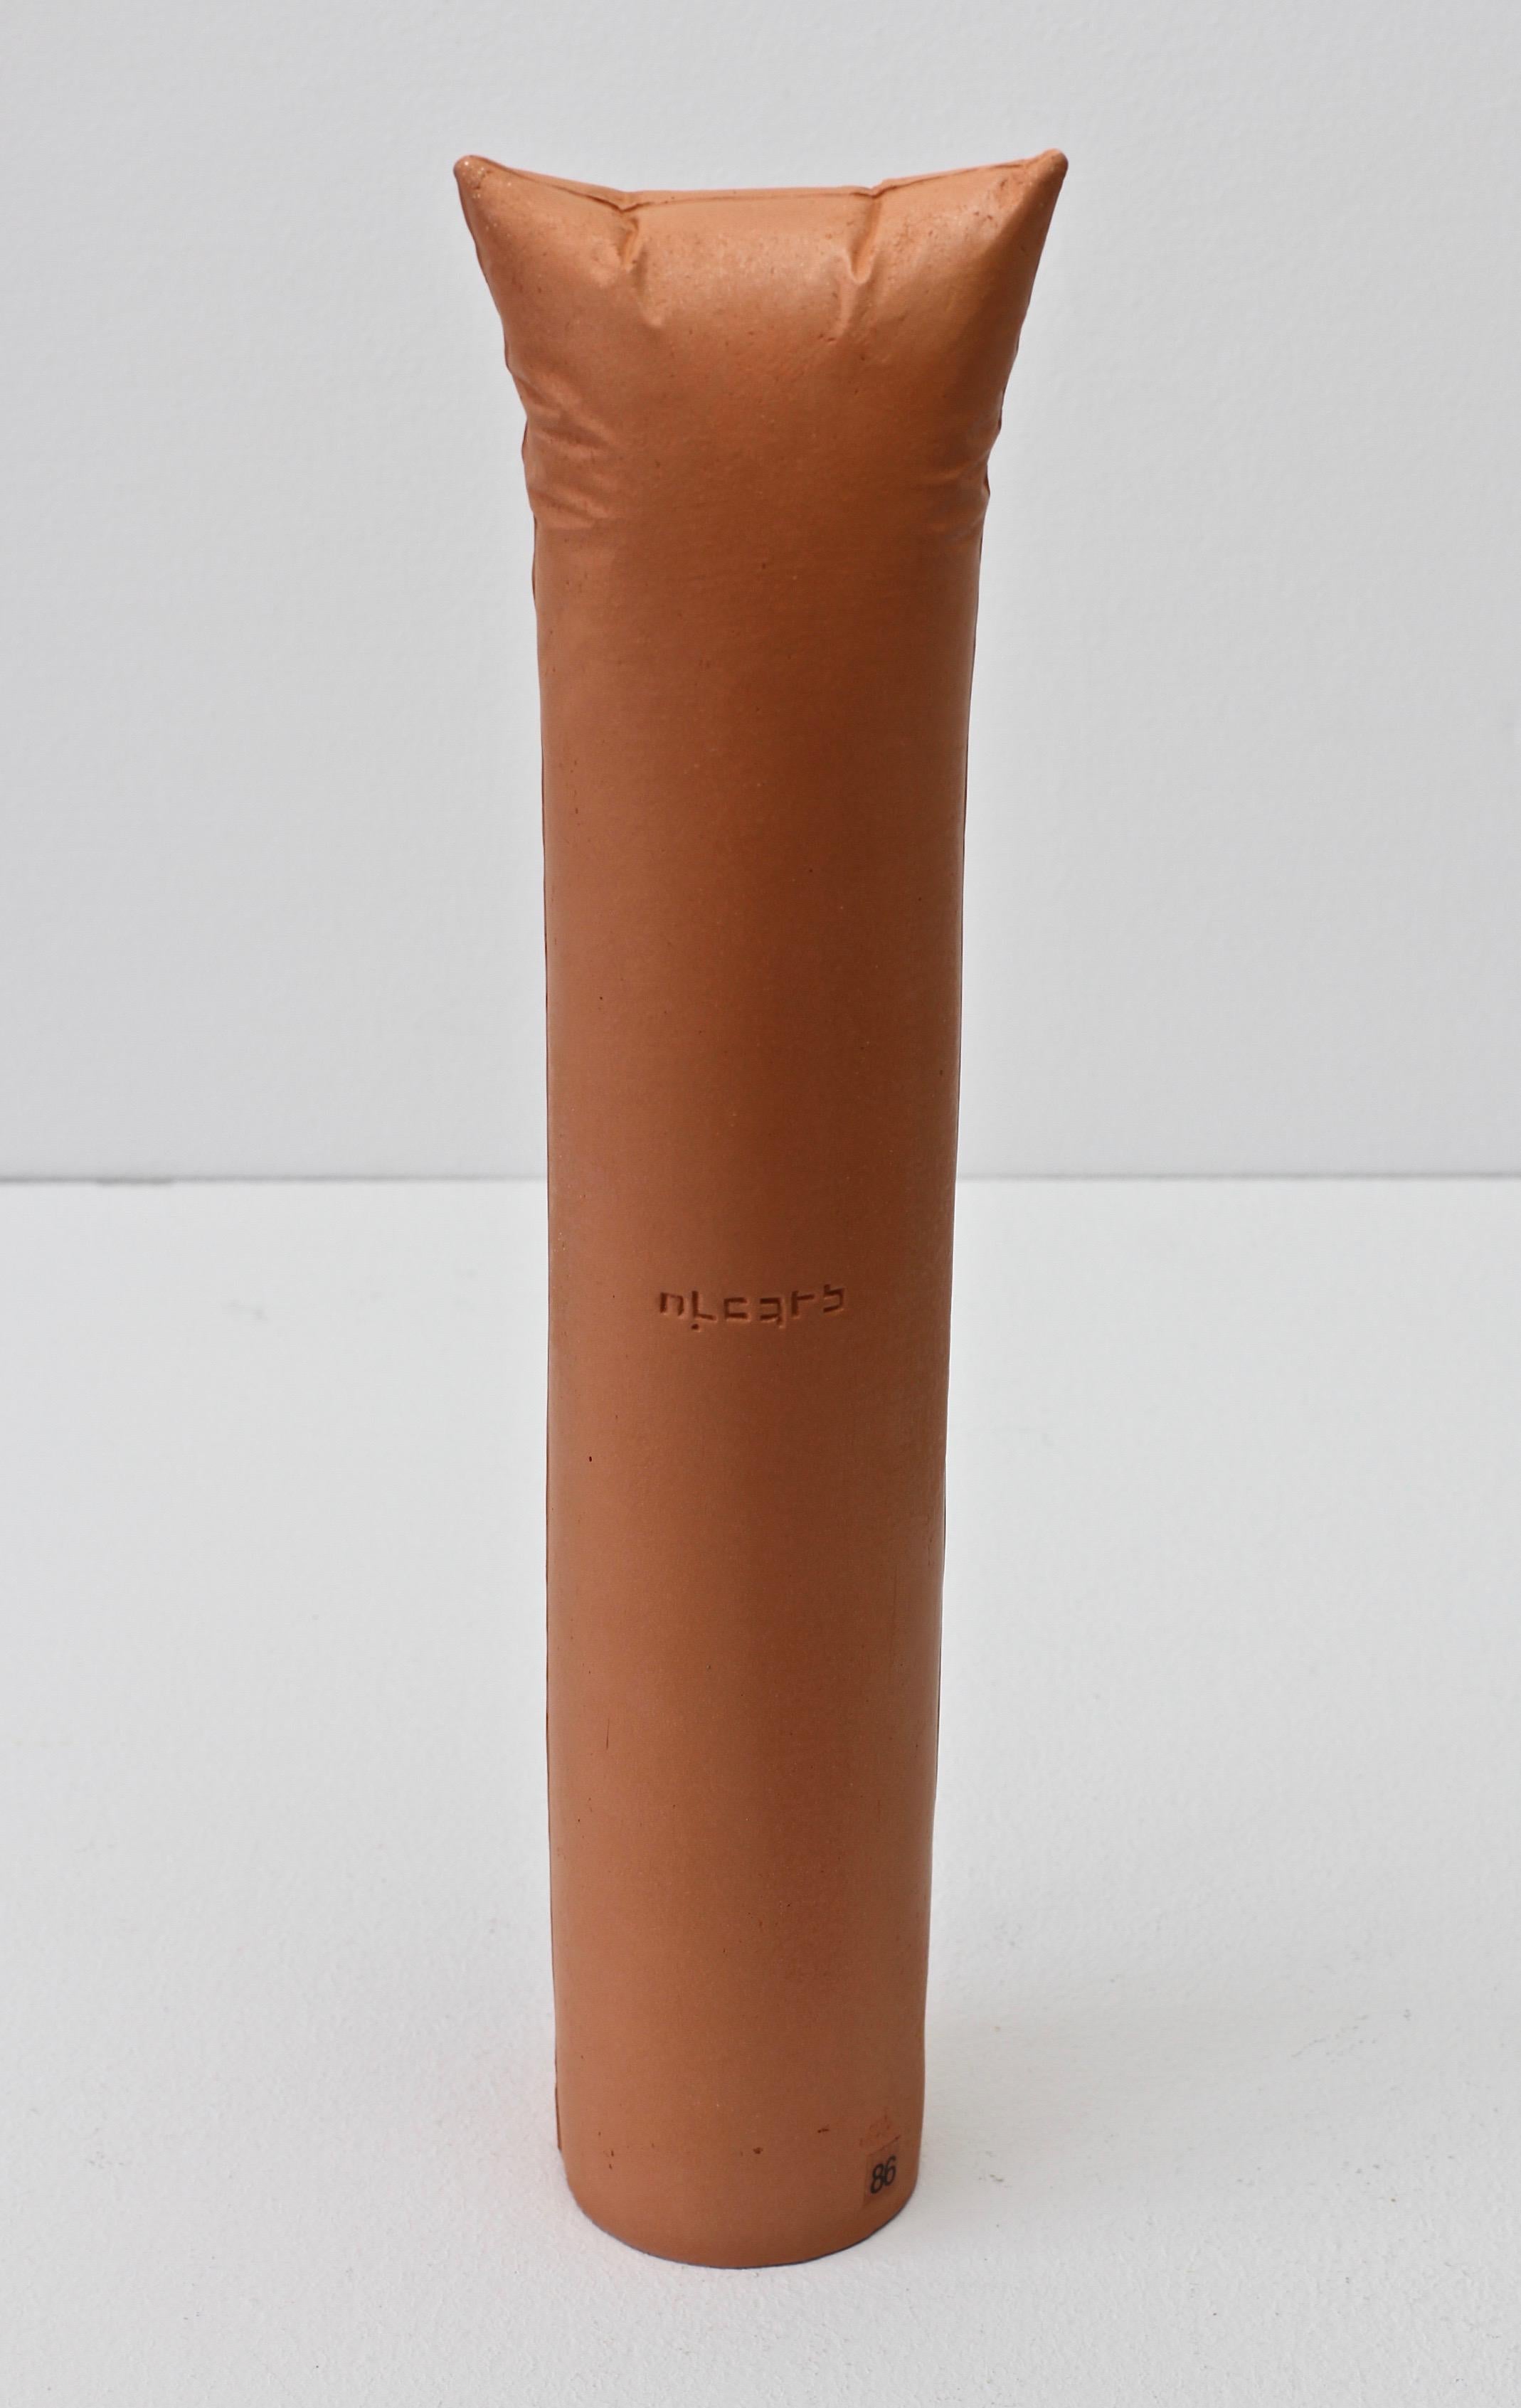 Gabriele Puetz Pillow Pillar 'Nichts' Vintage German Art Pottery Sculpture # 5/7 For Sale 2